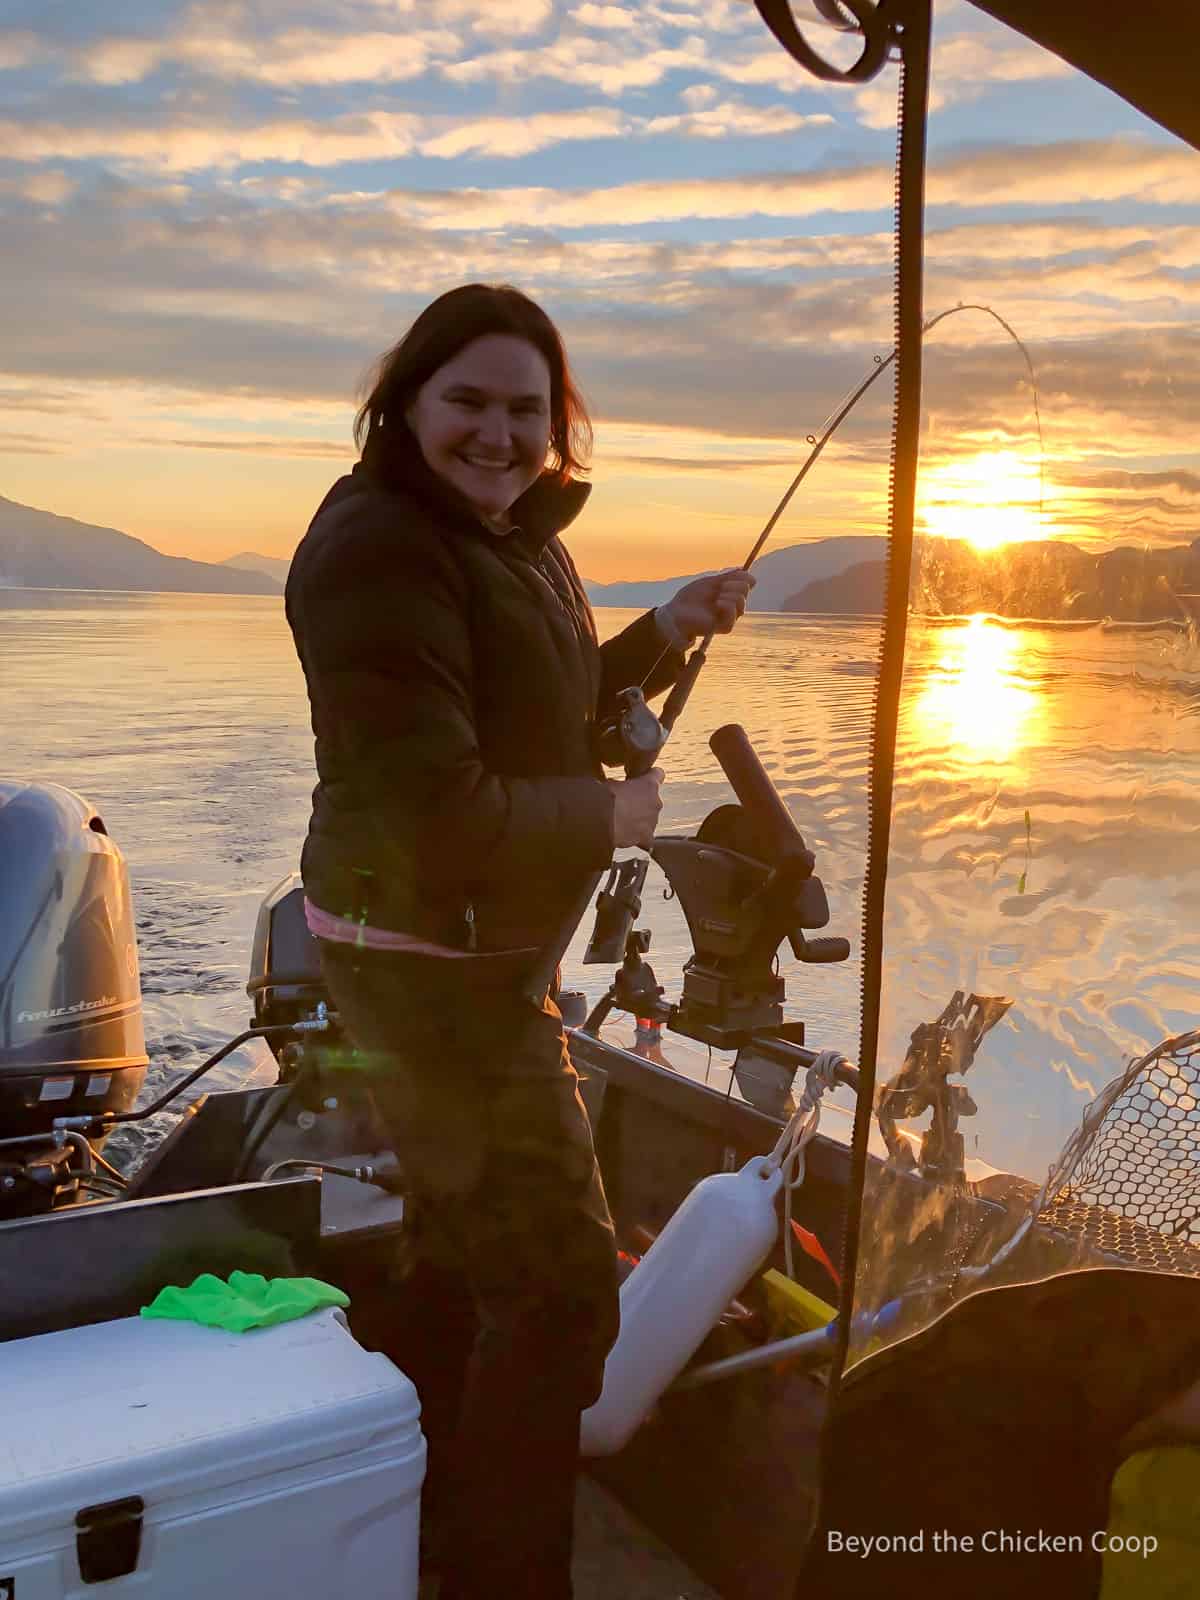 Catching fish at sunset.